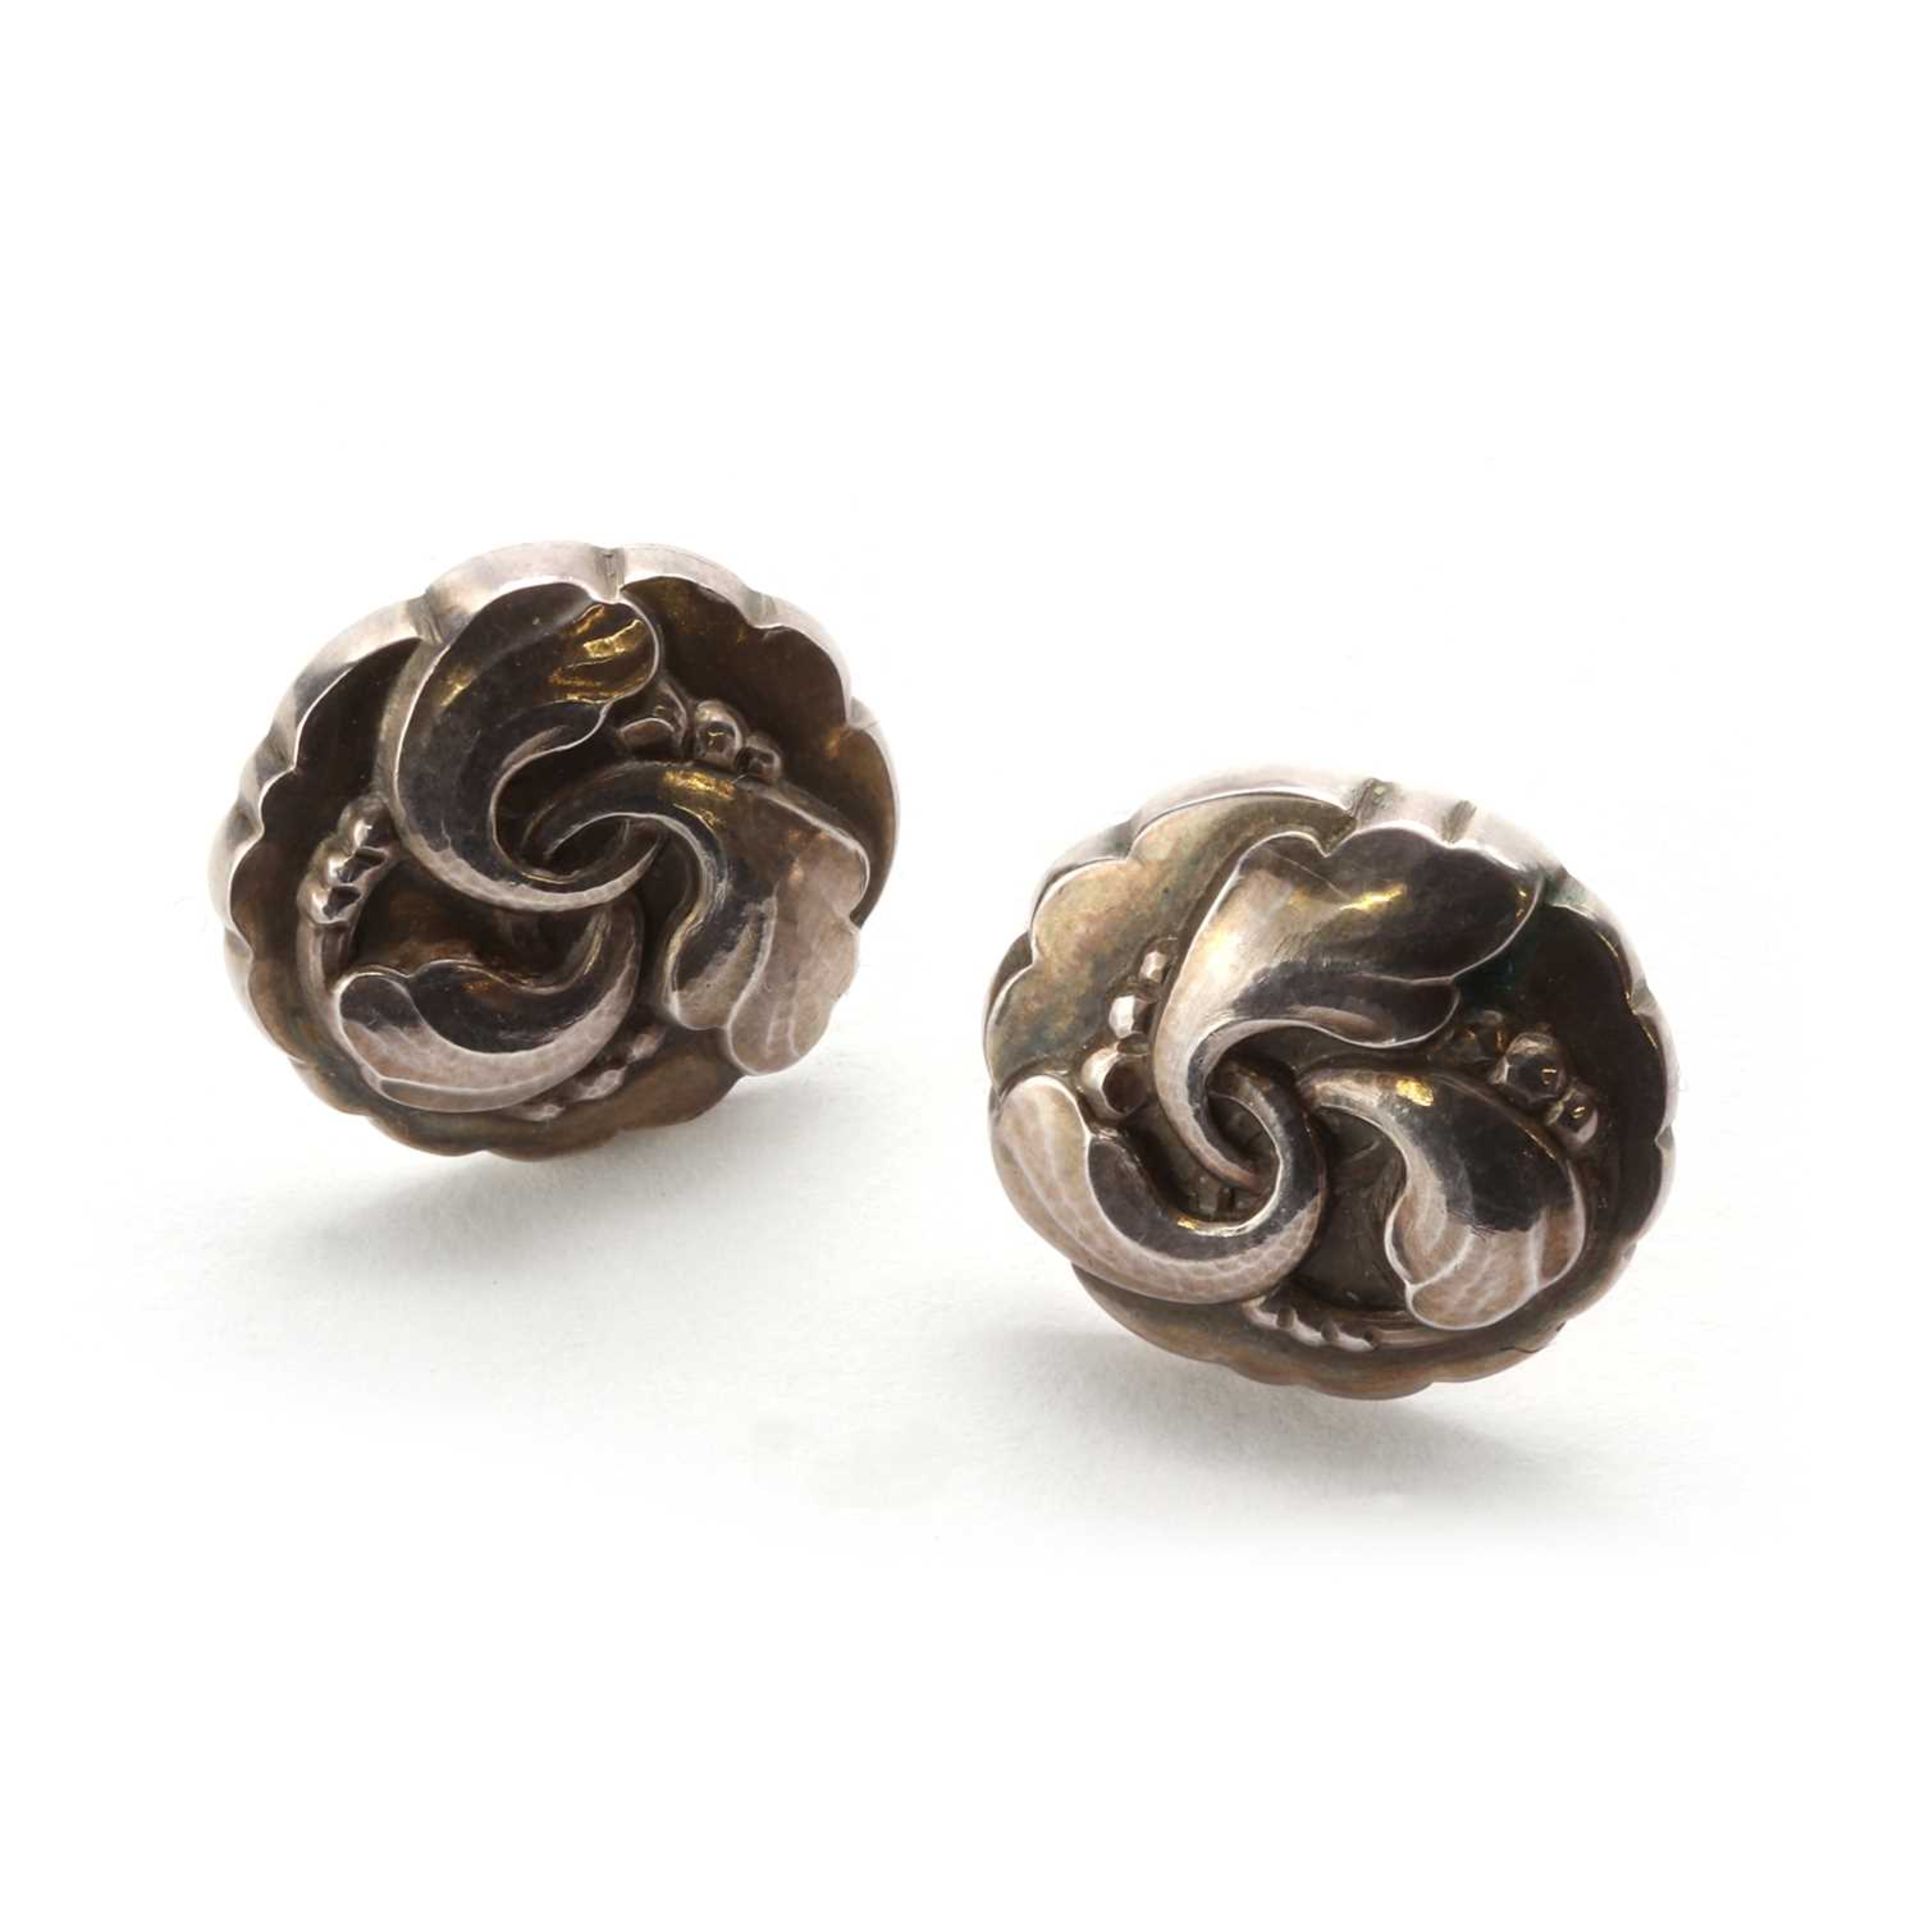 A pair of sterling silver Georg Jensen earrings,